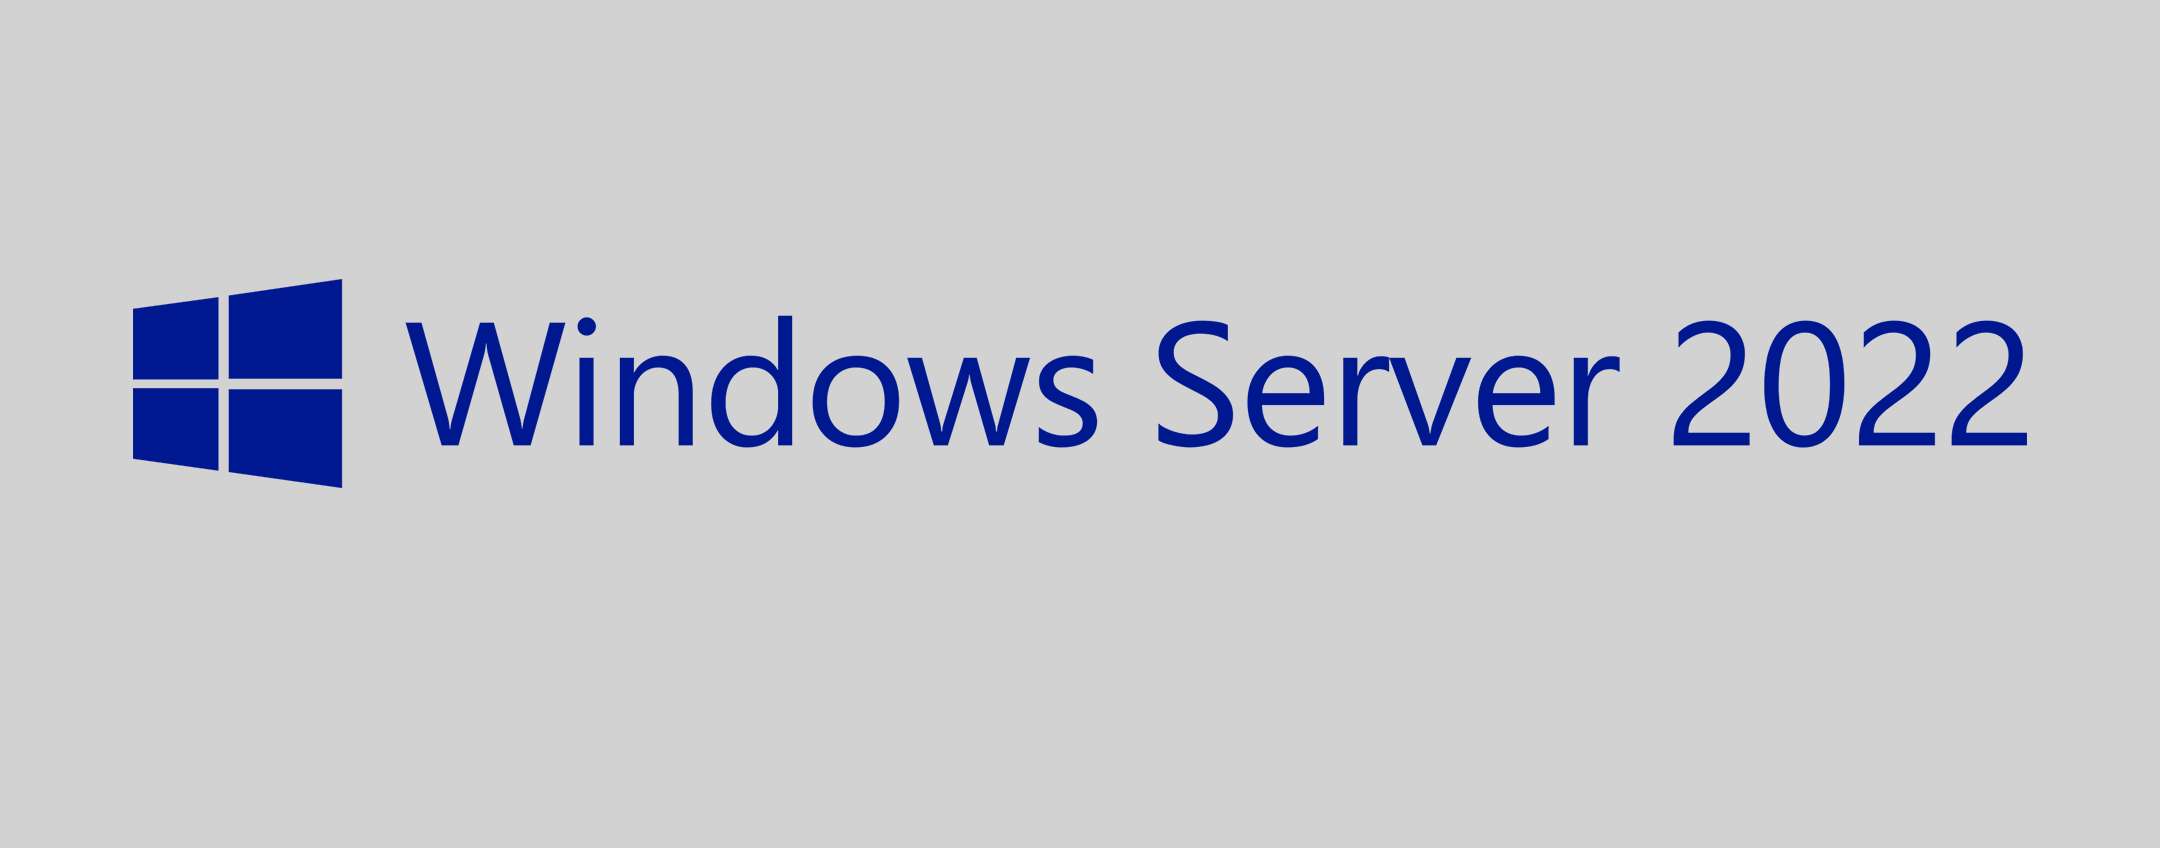 Windows Server: Microsoft conferma i problemi